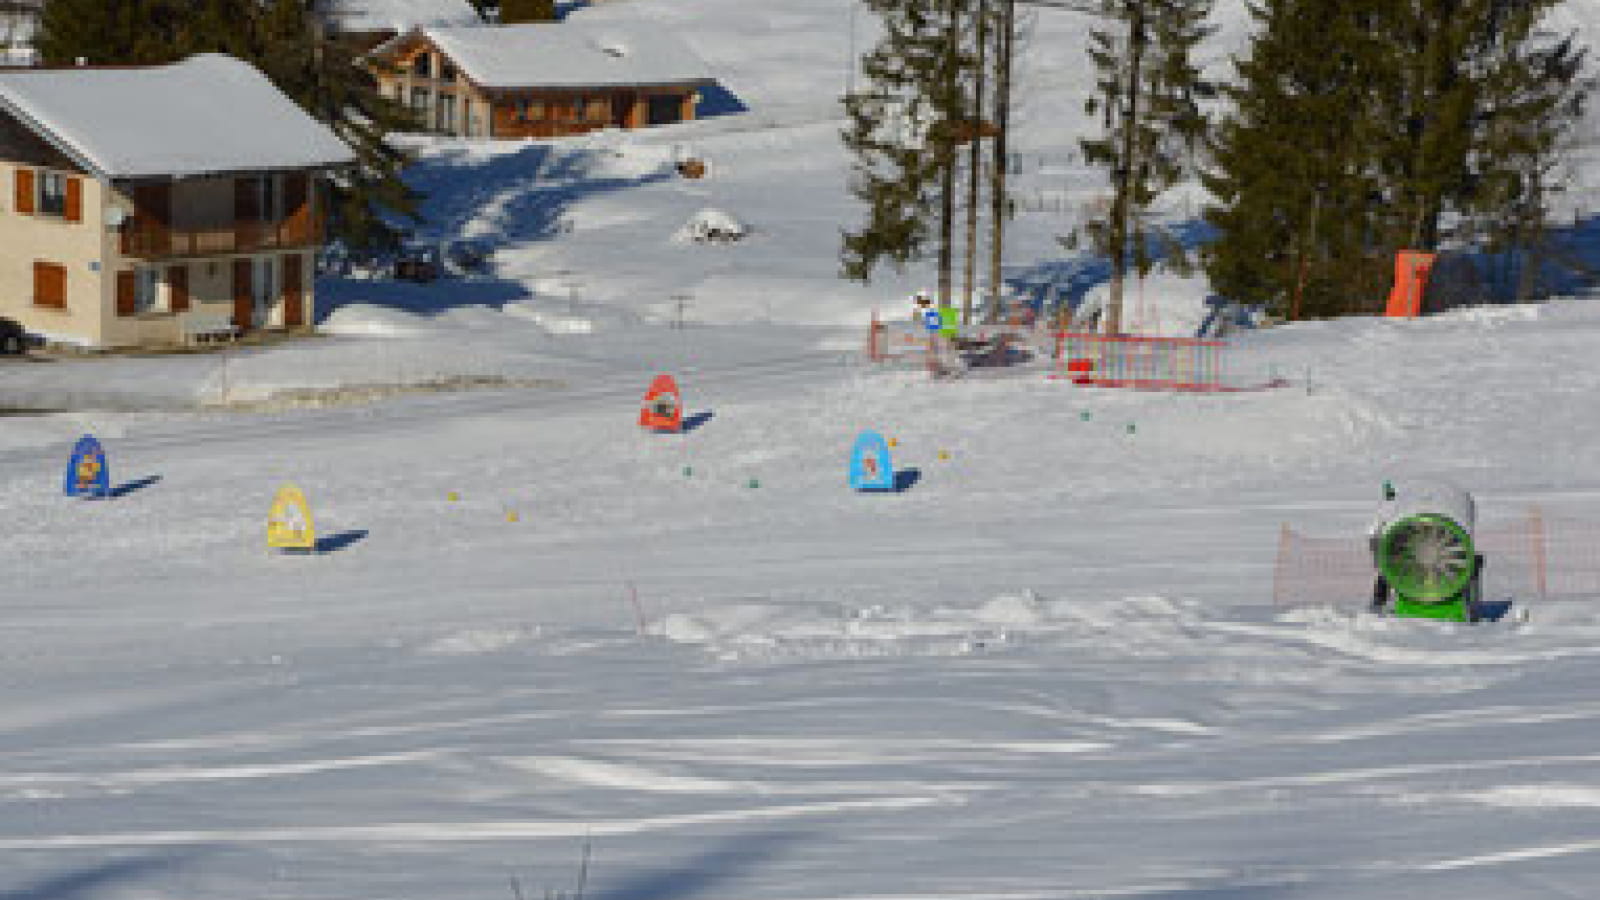 Station de ski alpin - Chaux-Neuve